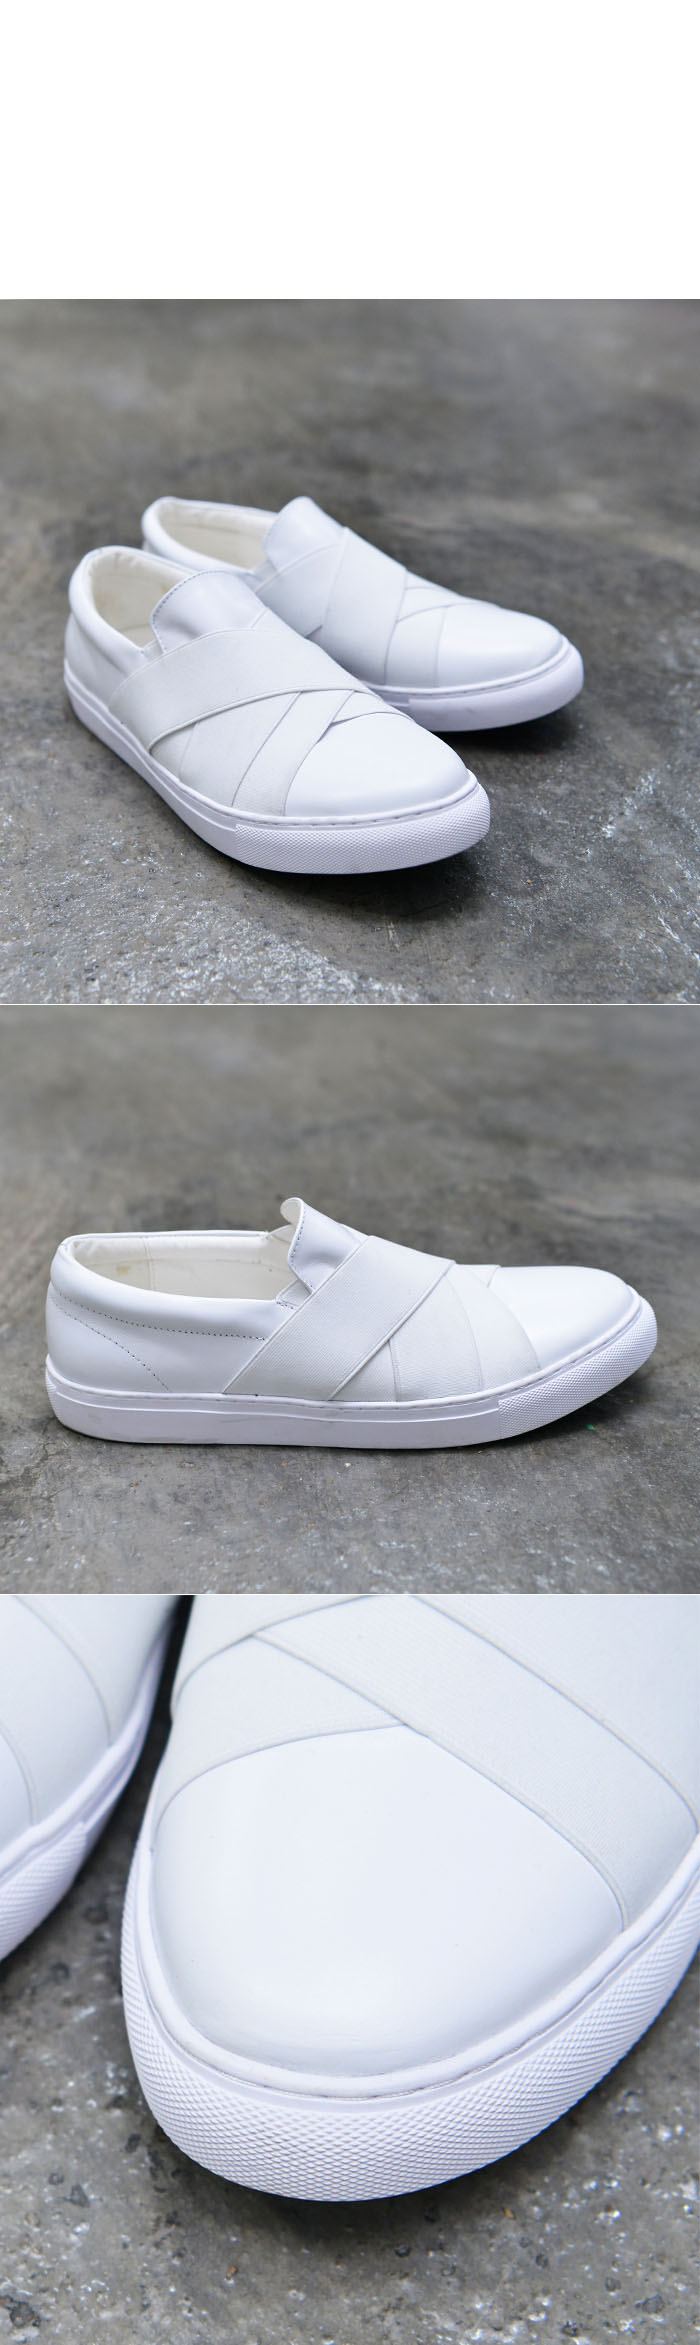 Shoes :: Designer Leather Bandage Slipon-Shoes 561 - GUYLOOK Men's ...